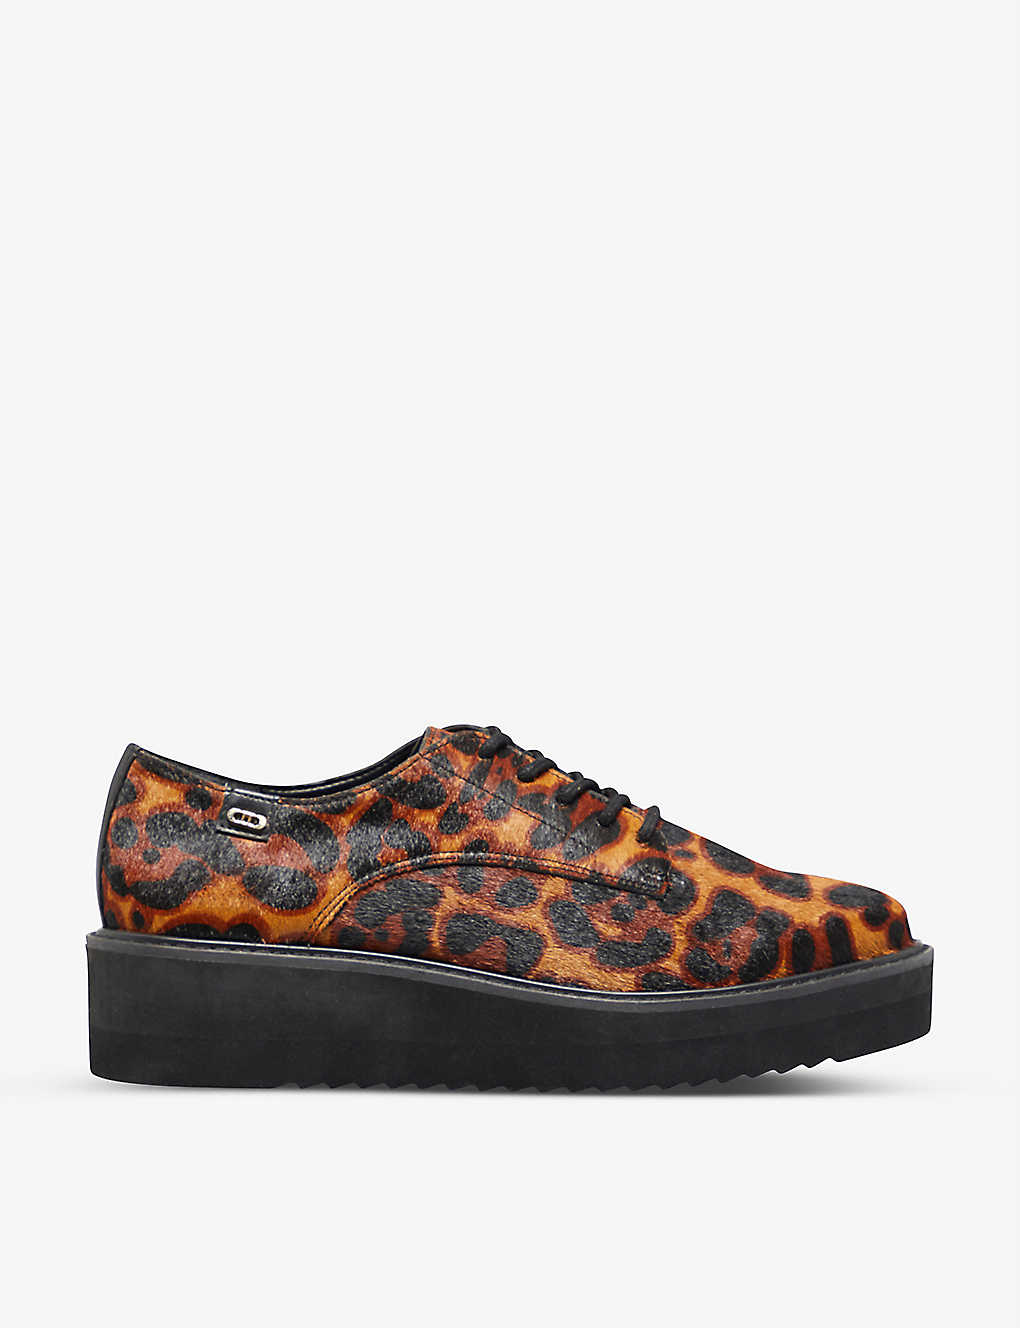 Eyesight appetite spherical DUNE - Falon leopard-print flatform shoes | Selfridges.com